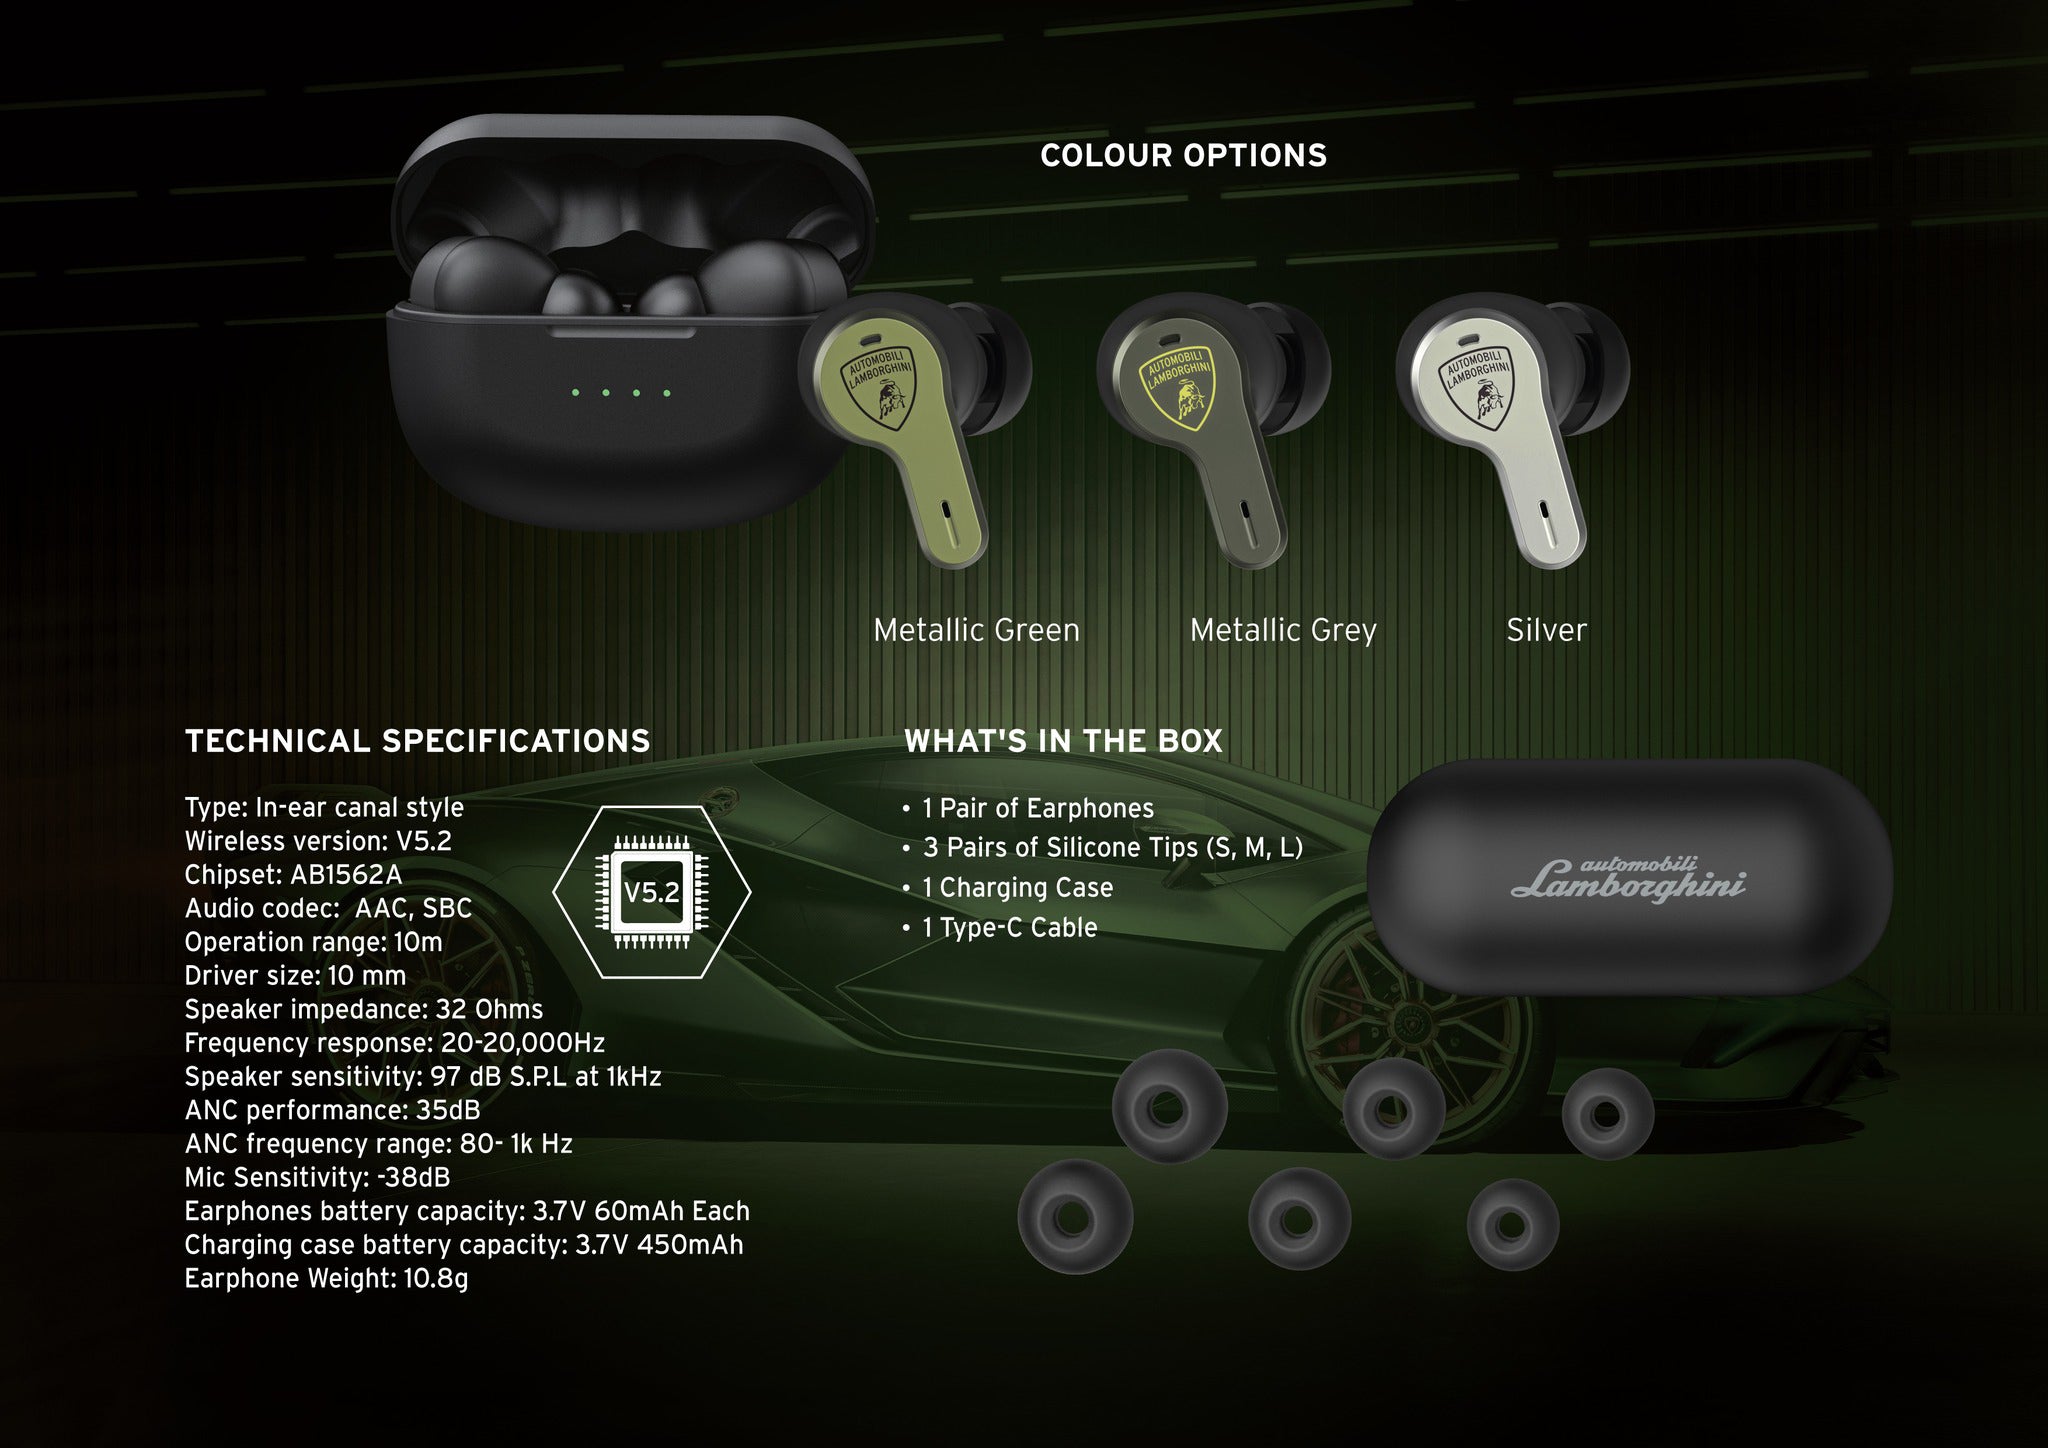 Lamborghini Hybrid Active Noise Cancellation True Wireless Earphones – Huracan IW04